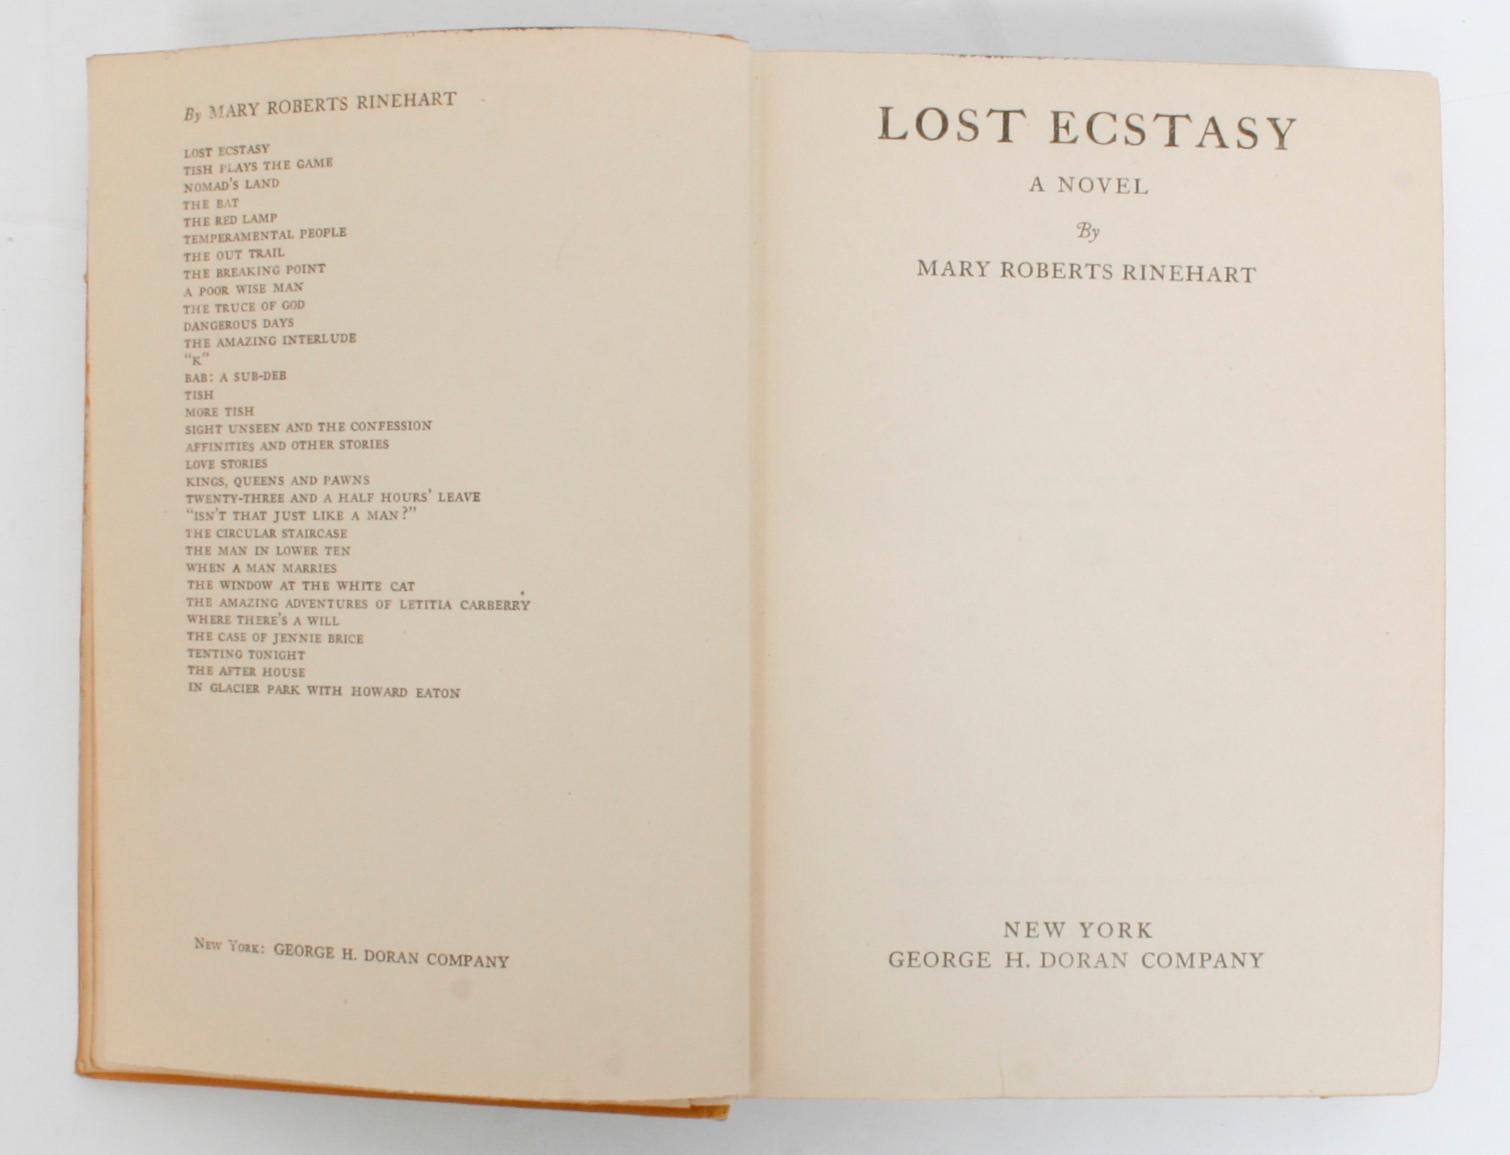 Lost Ecstasy by Mary Roberts Rinehart. George H. Doran Company, New York, 1927. 1st Ed hardcover. 